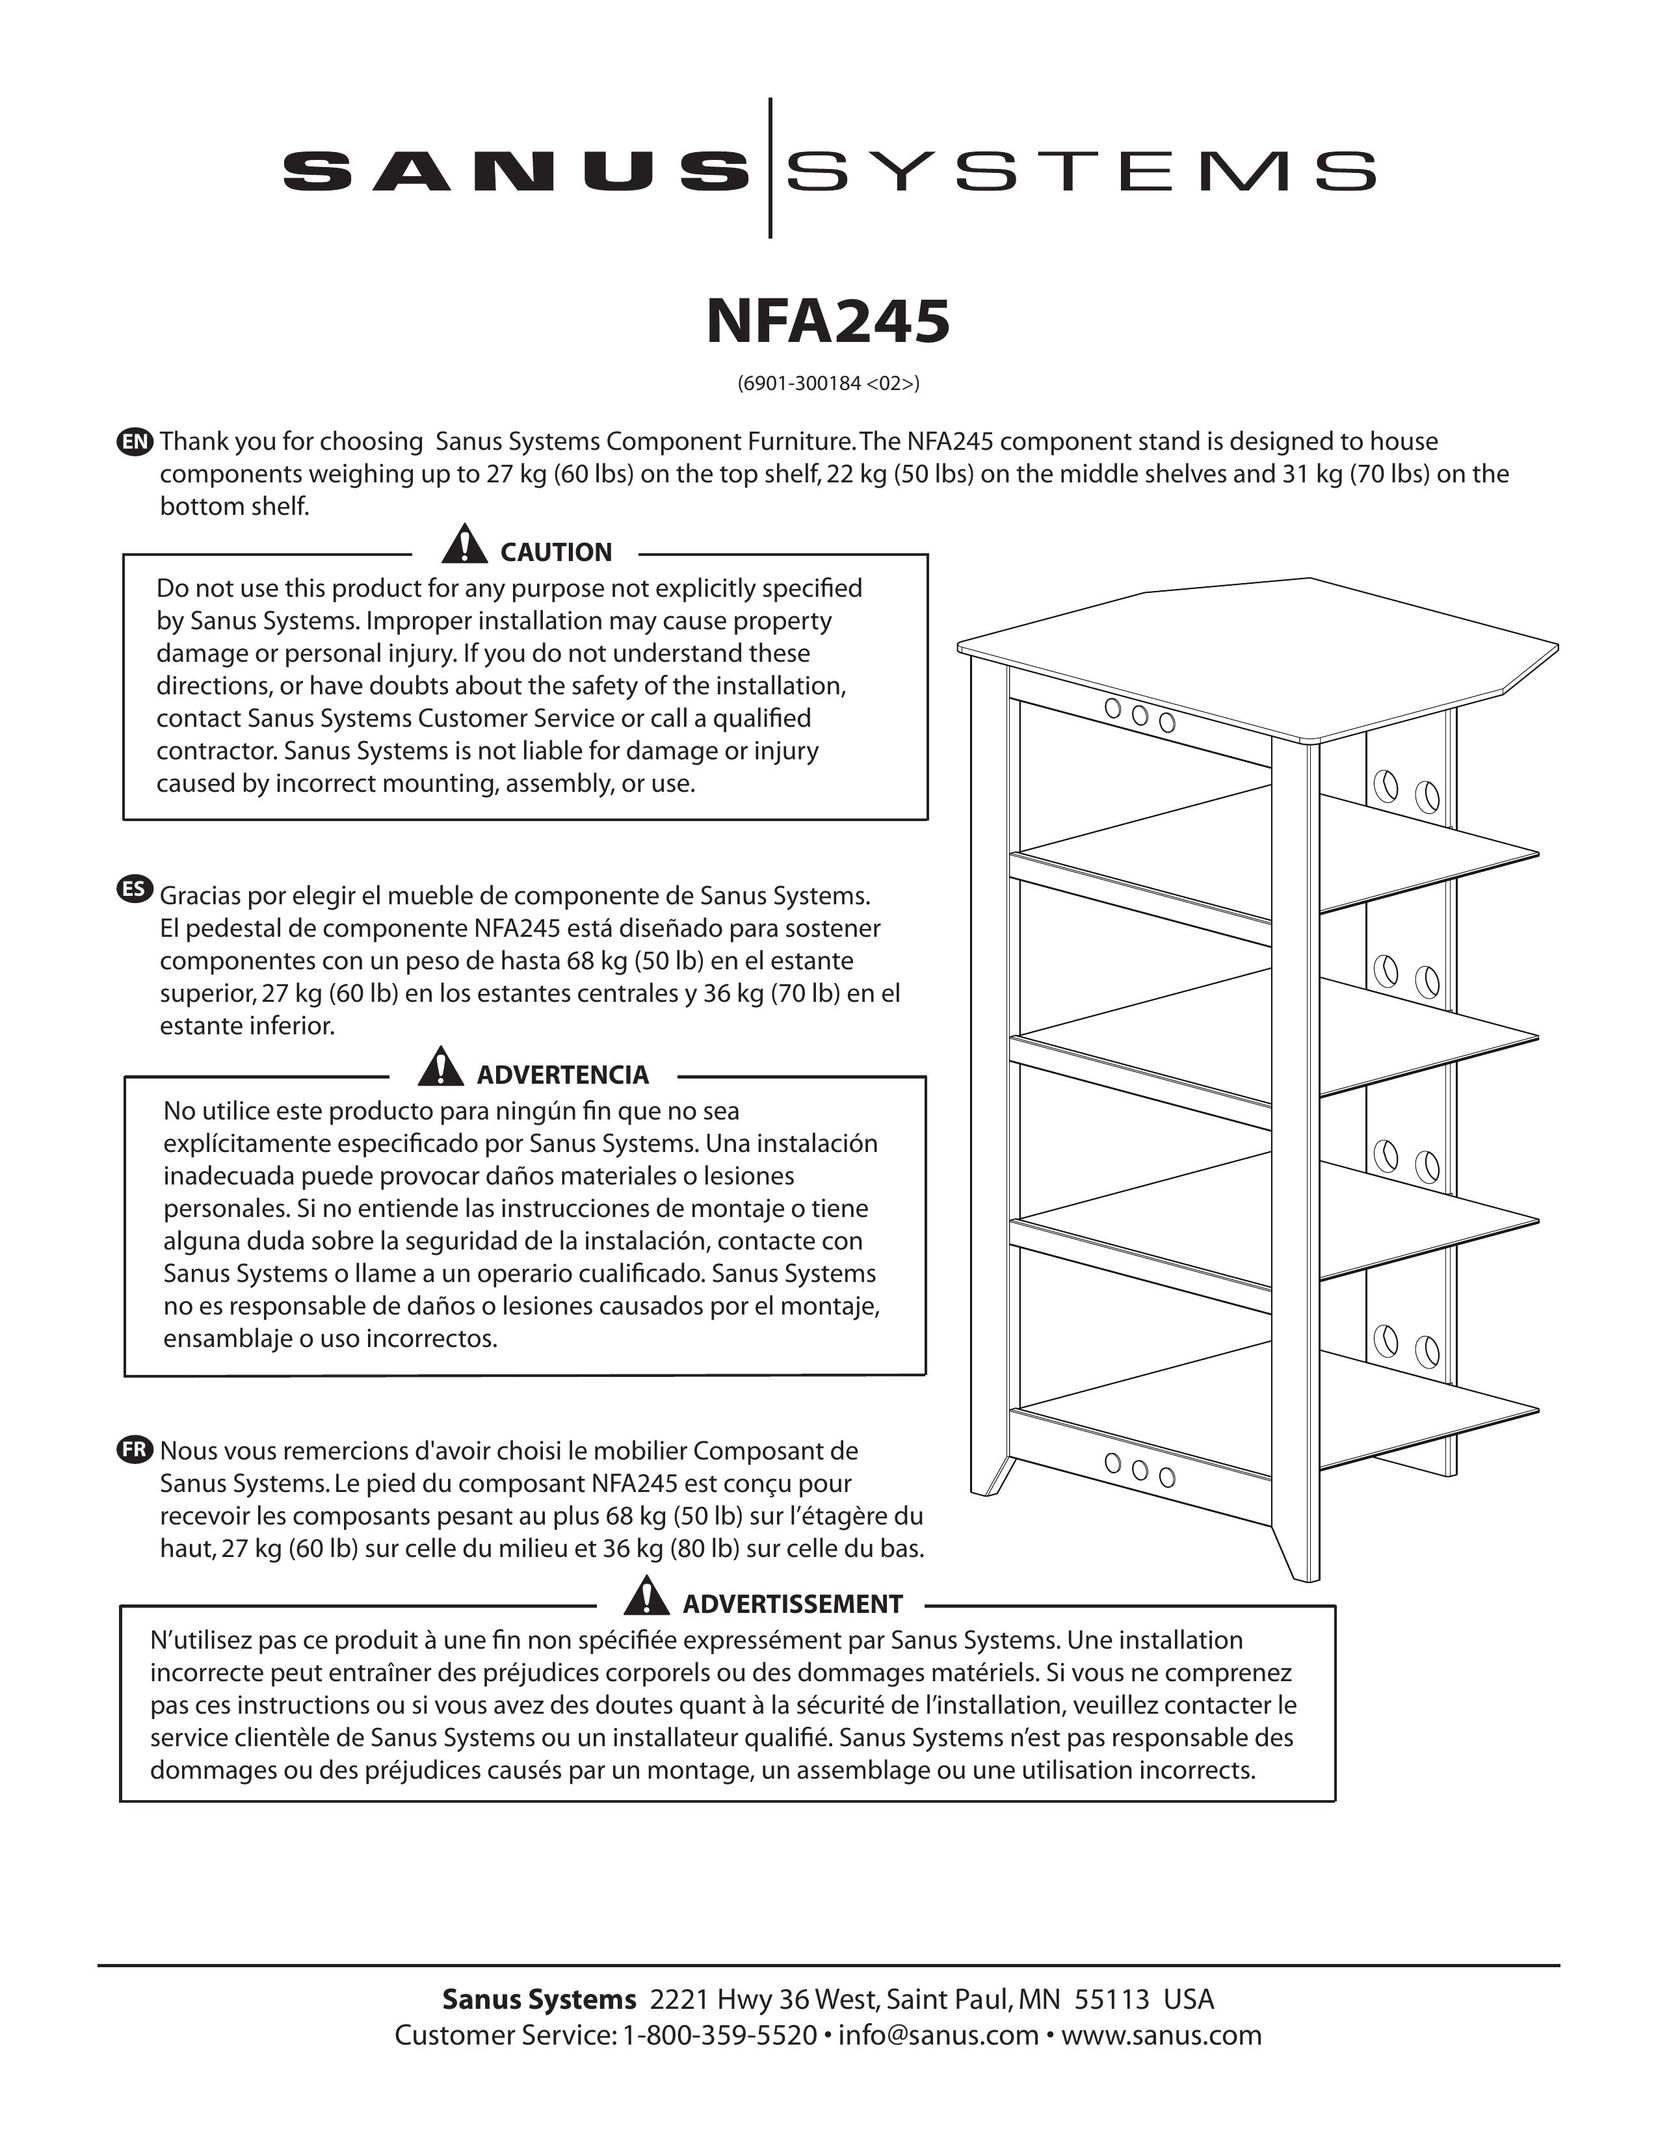 Sanus Systems NFA245 Indoor Furnishings User Manual